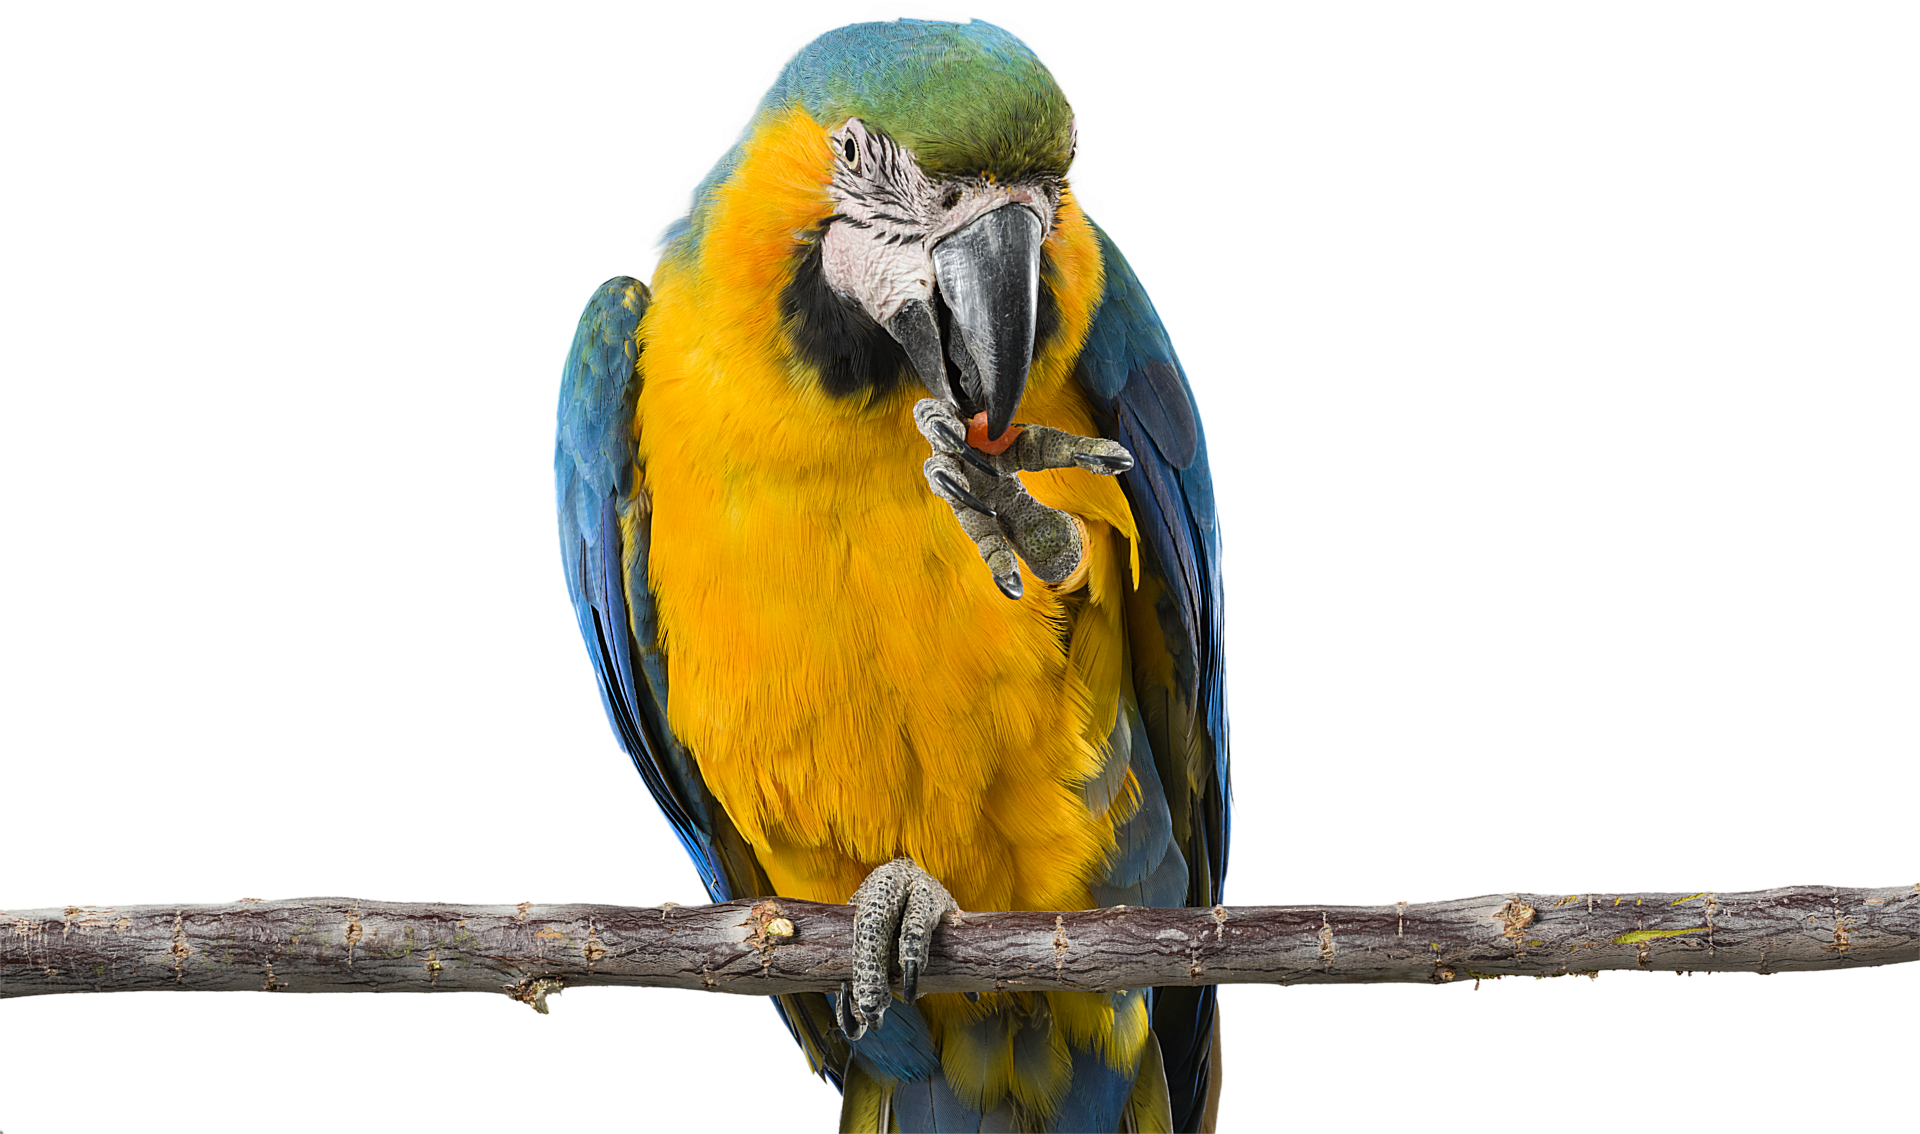 best parrot food